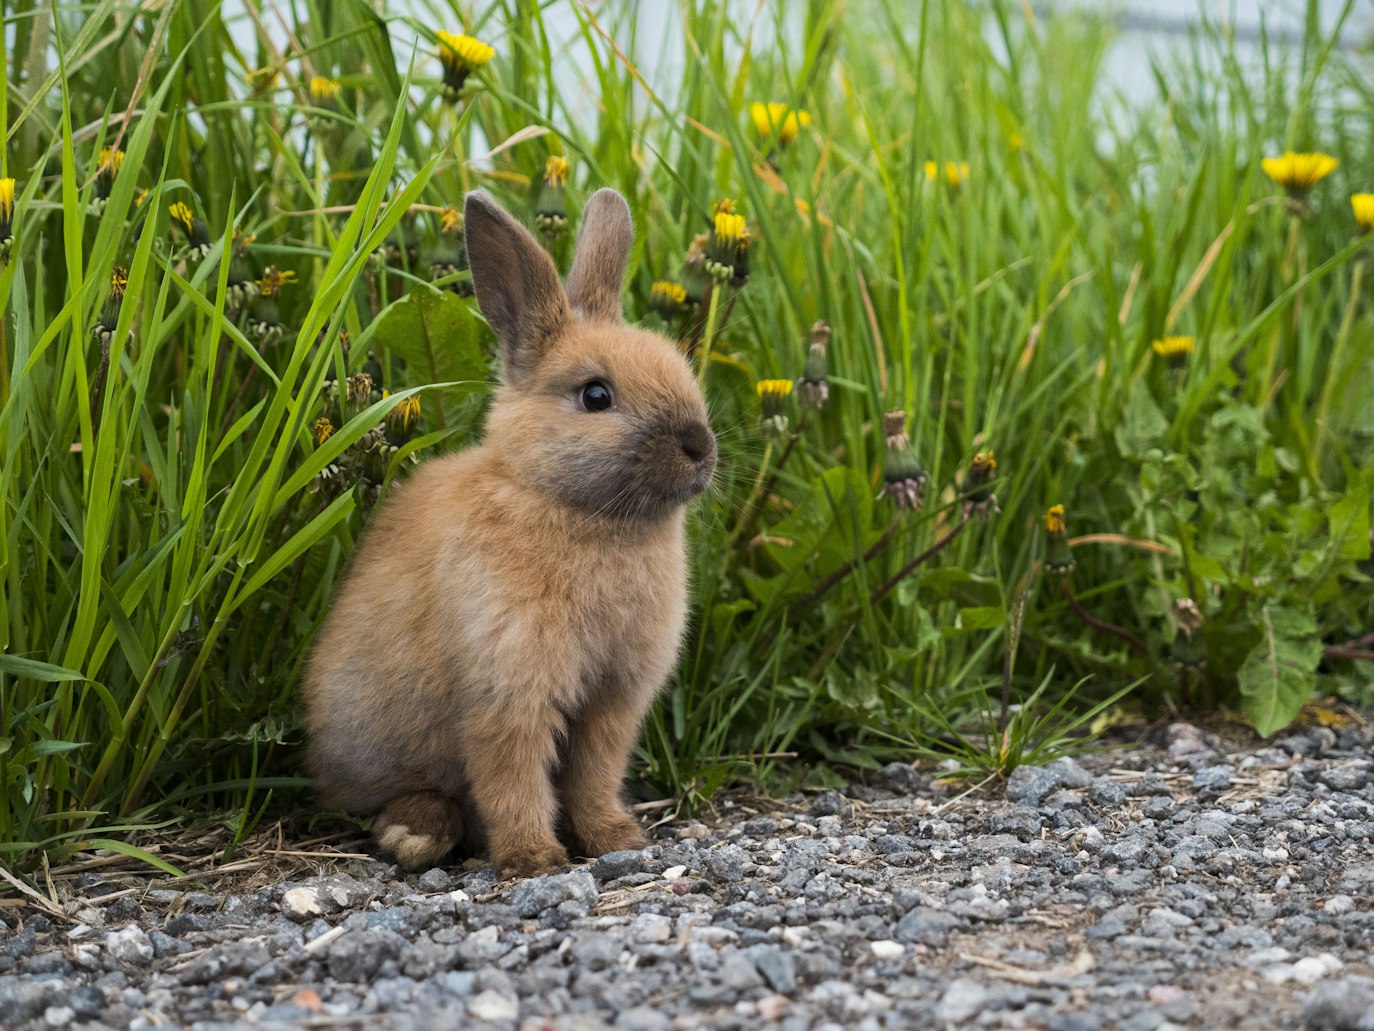 Best Hay Feeder For Rabbits Based On Customer Ratings